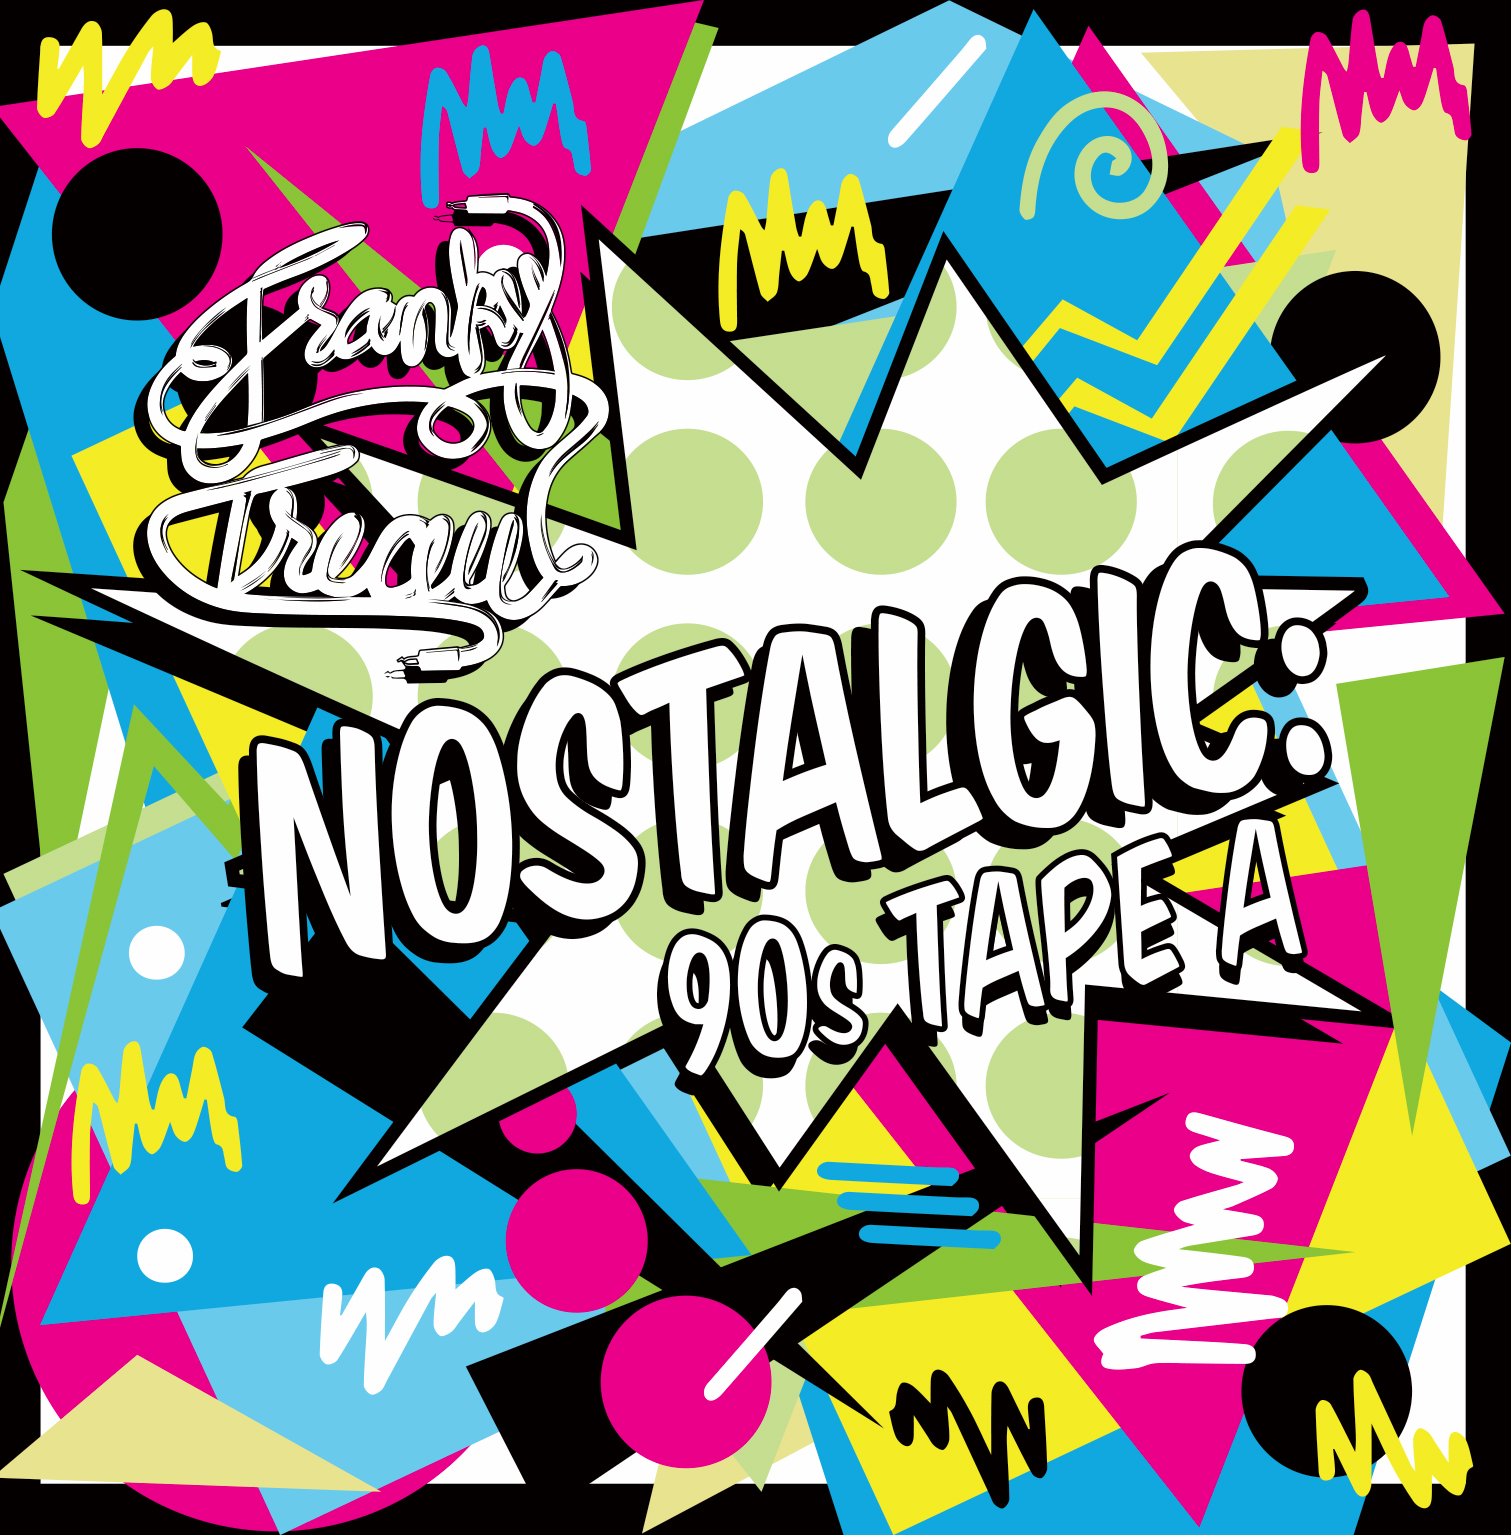 Franky Treau Debuts New Mixtape “Nostalgic: 90’s Tape A”